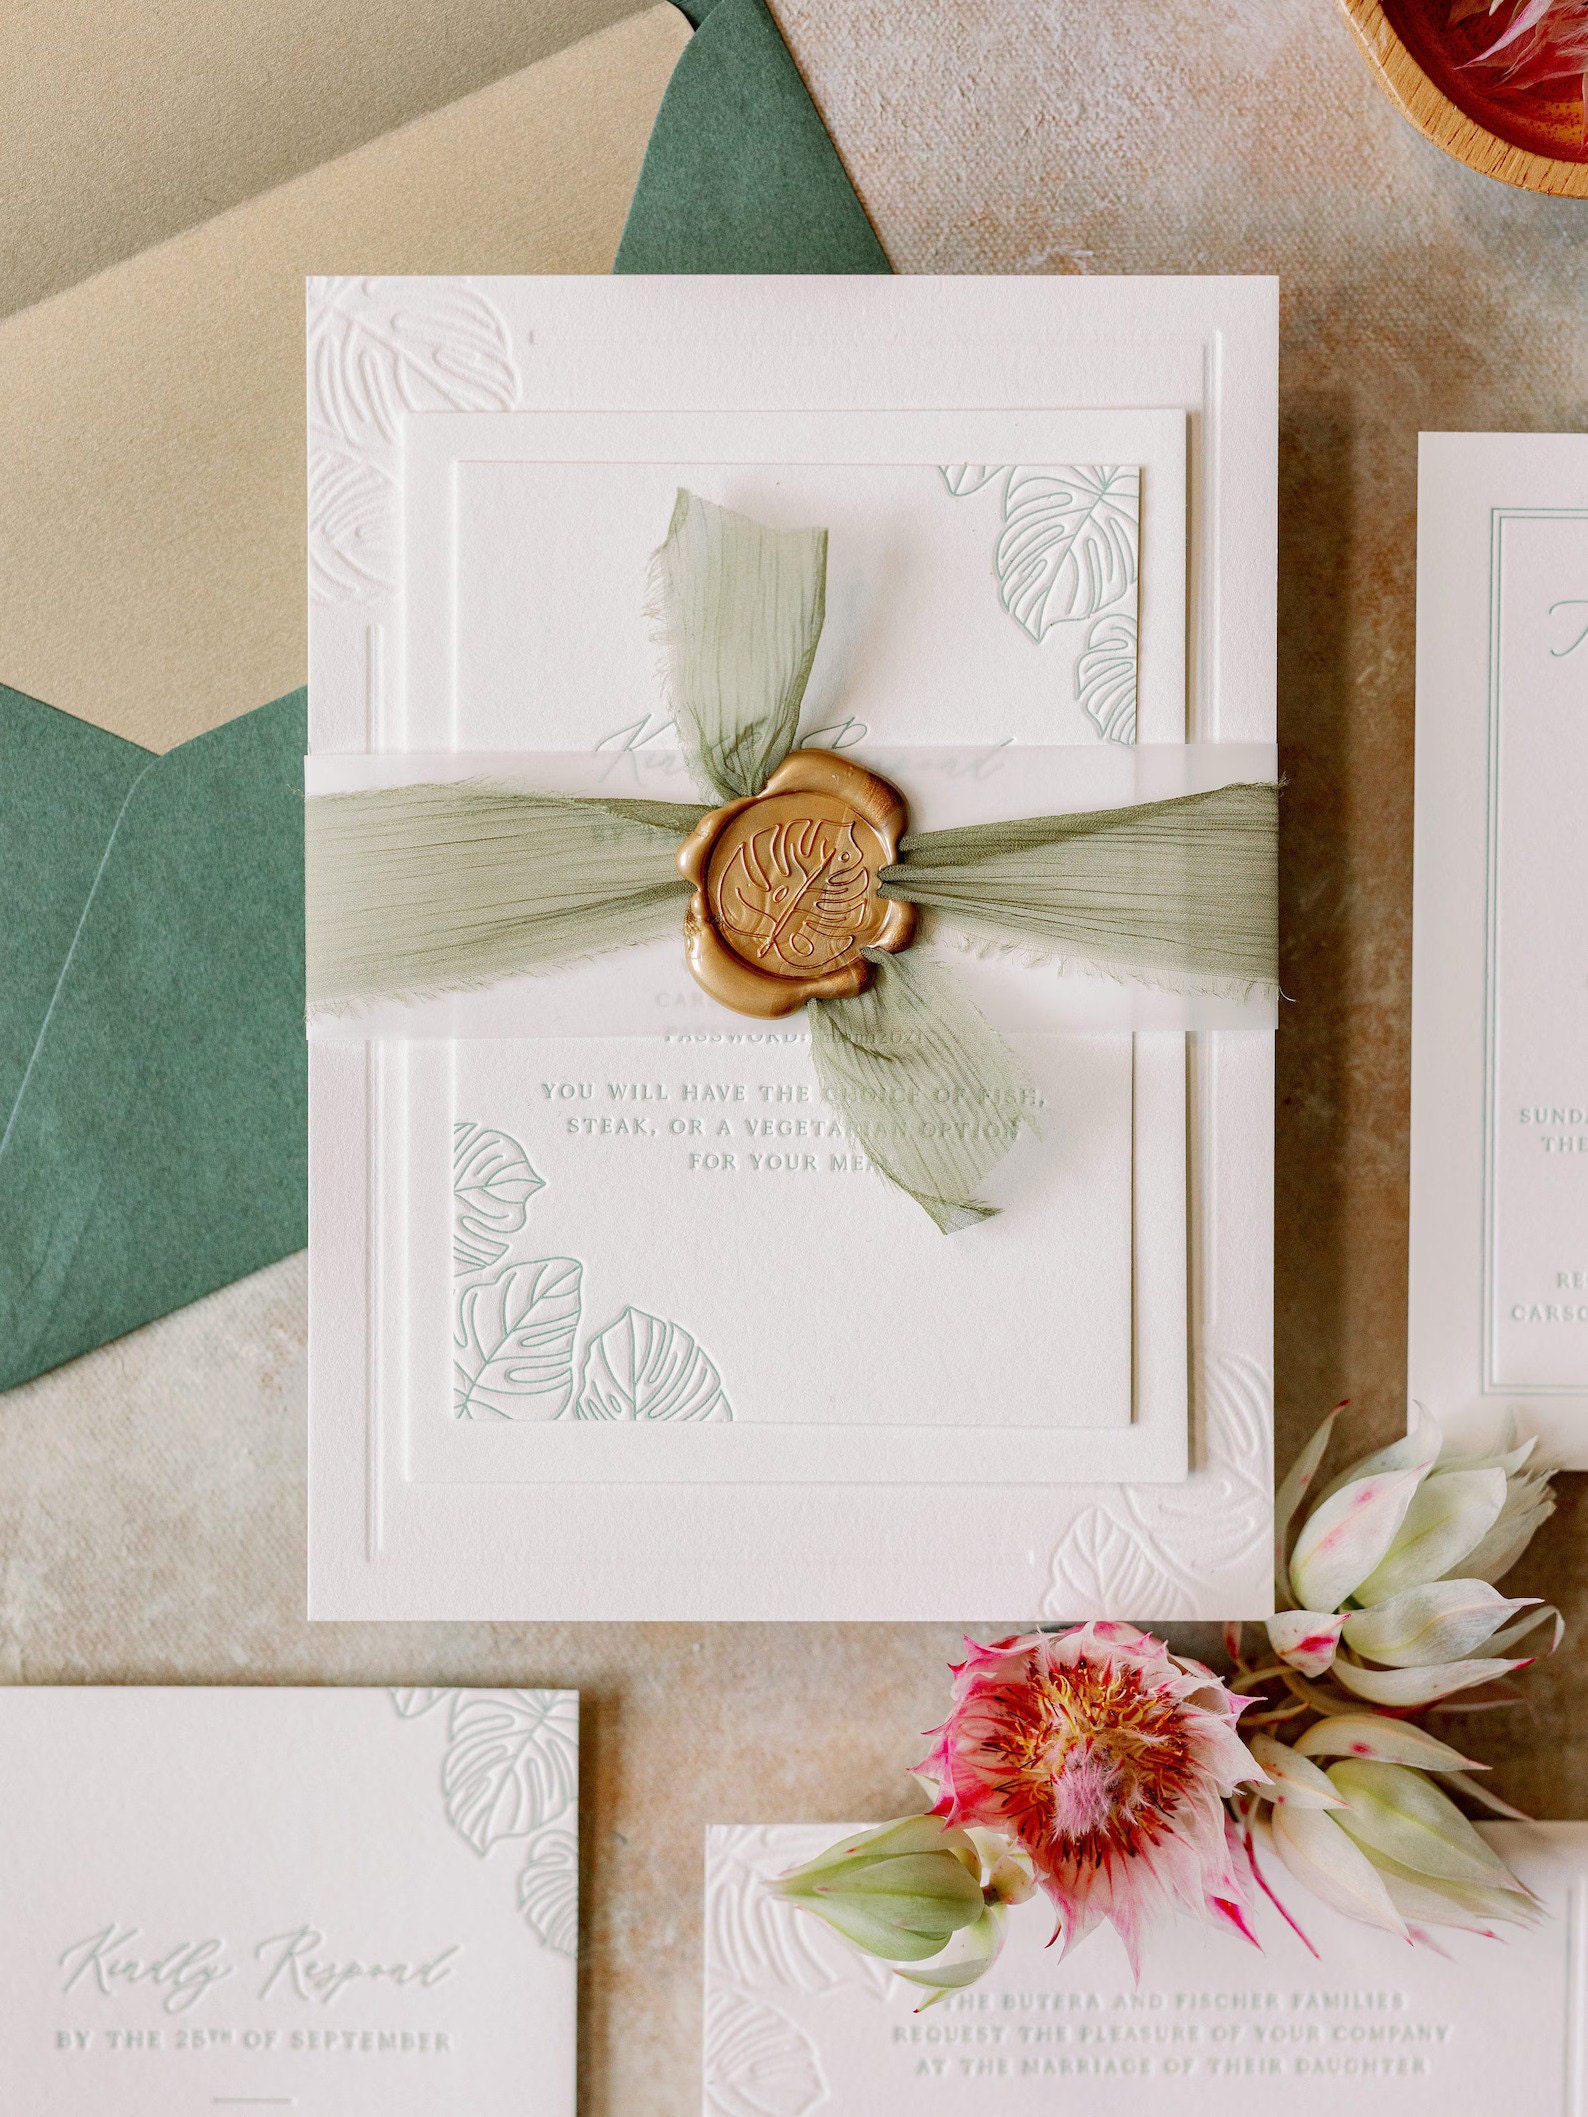 Embossed monstera leaf wedding invitations from Etsy